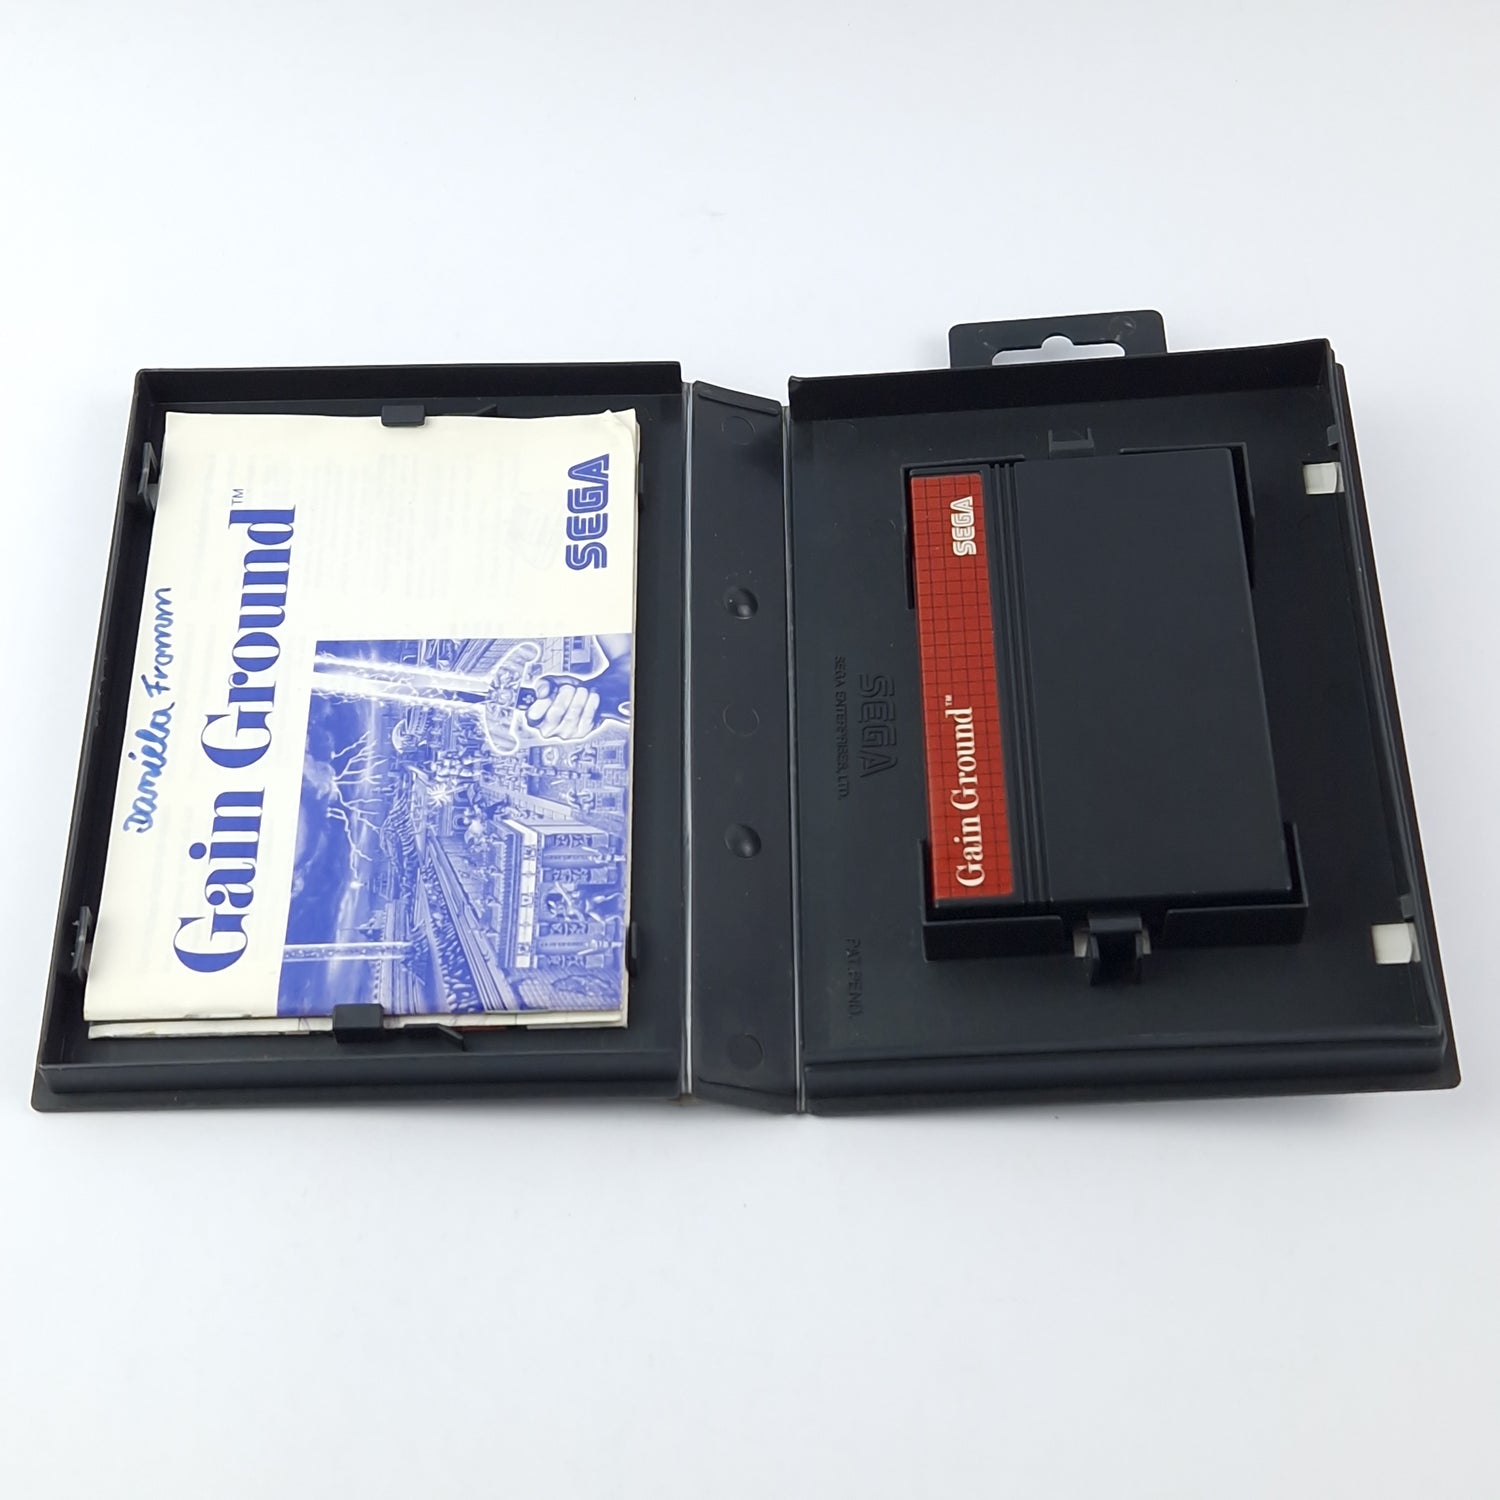 Sega Master System Spiel : Gain Ground - OVP Anleitung Modul PAL Cartridge